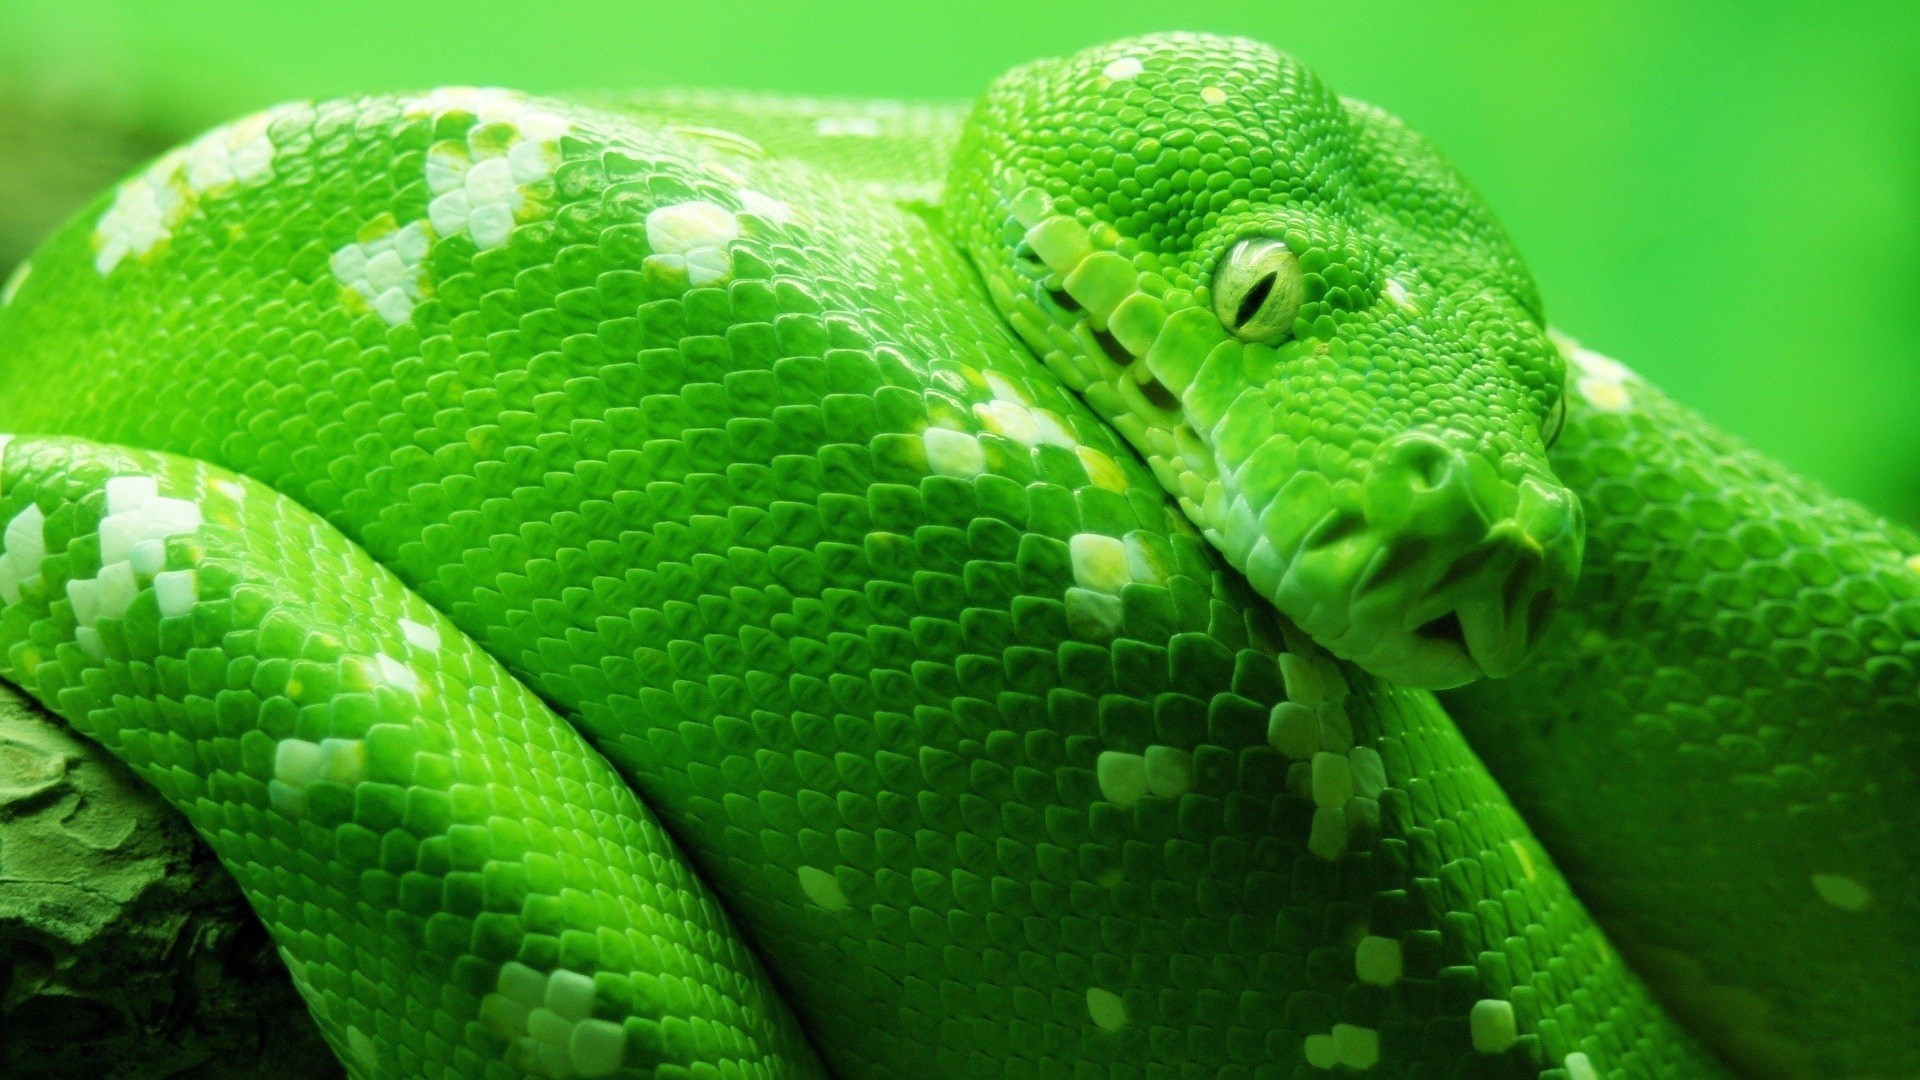 General 1920x1080 nature animals snake green reptiles closeup